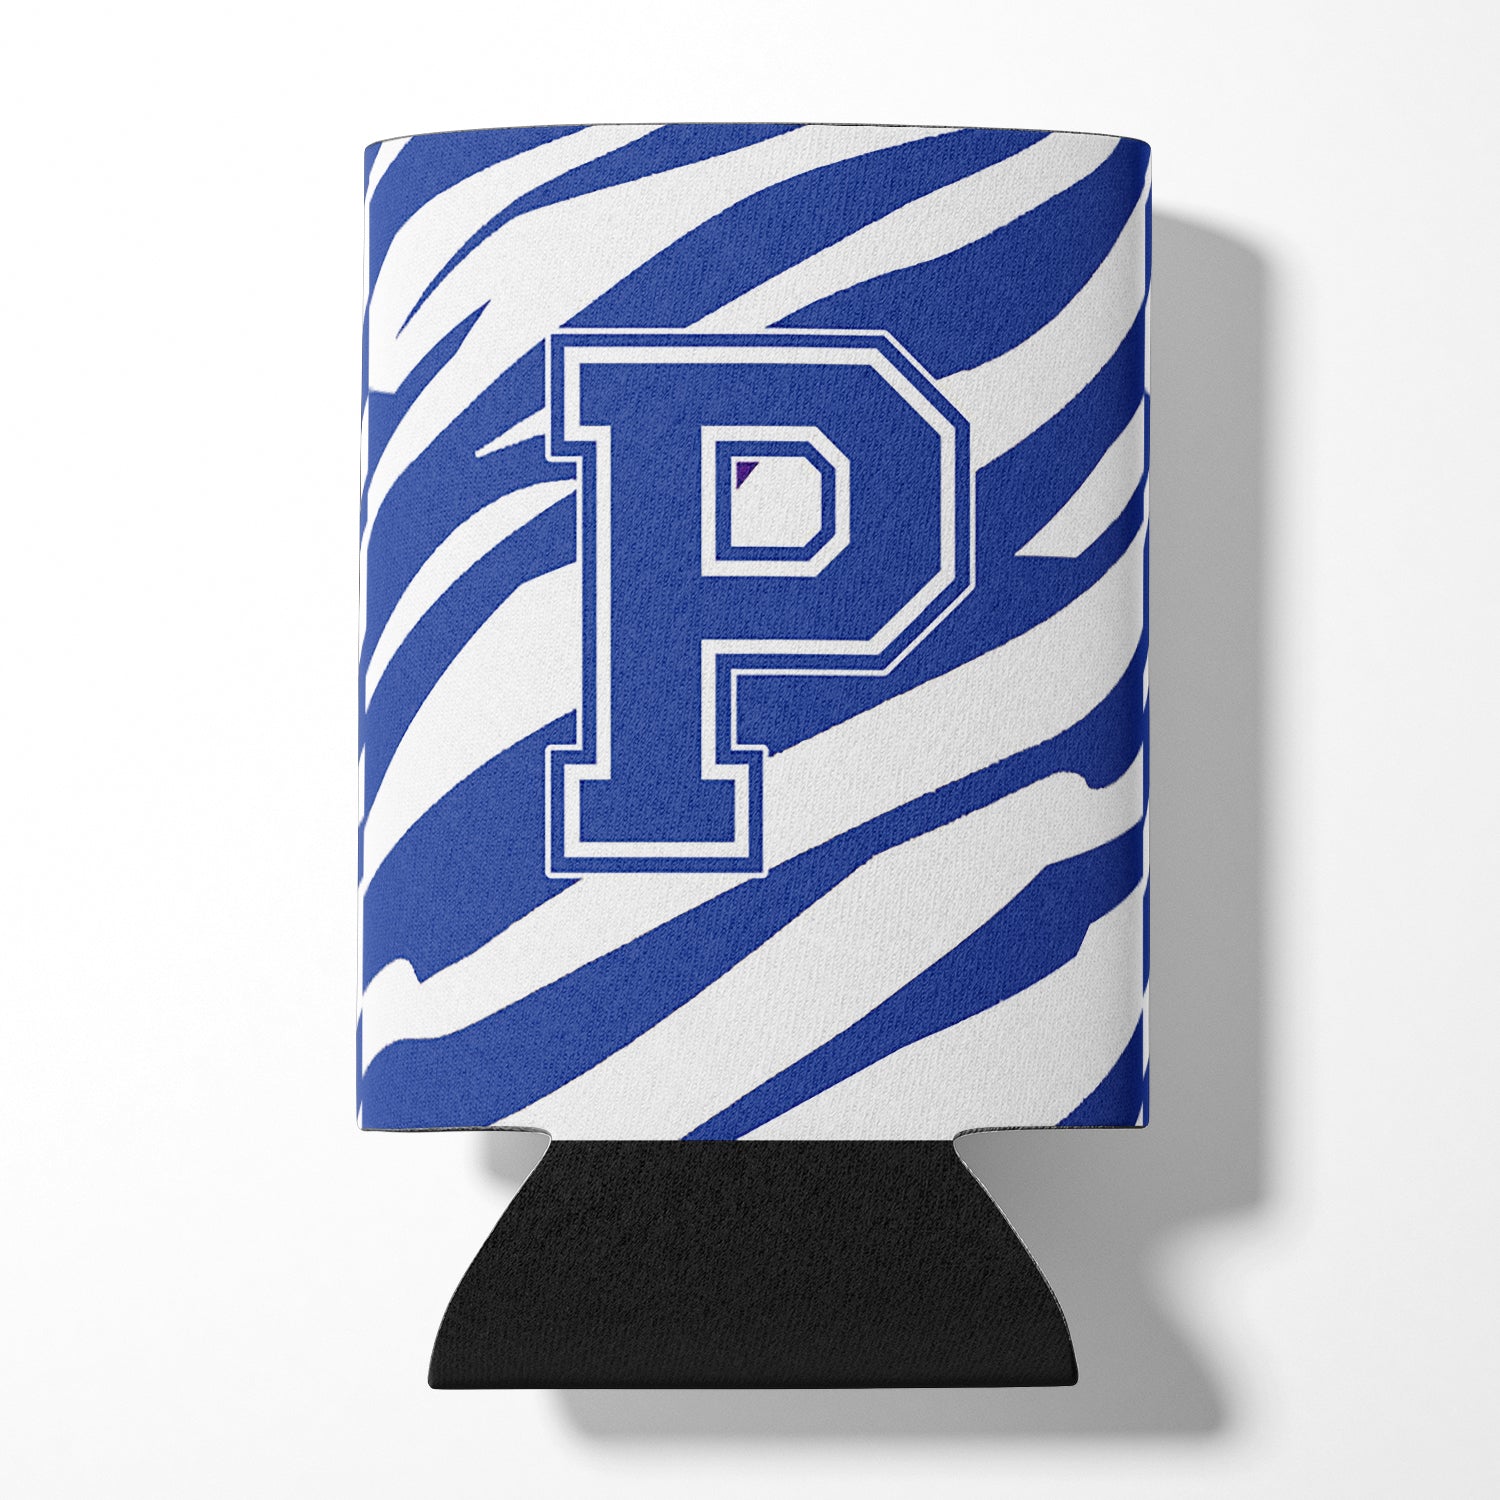 Monogramme initial de la lettre P - Tiger Stripe Blue and White Can Beverage Insulator Hugger